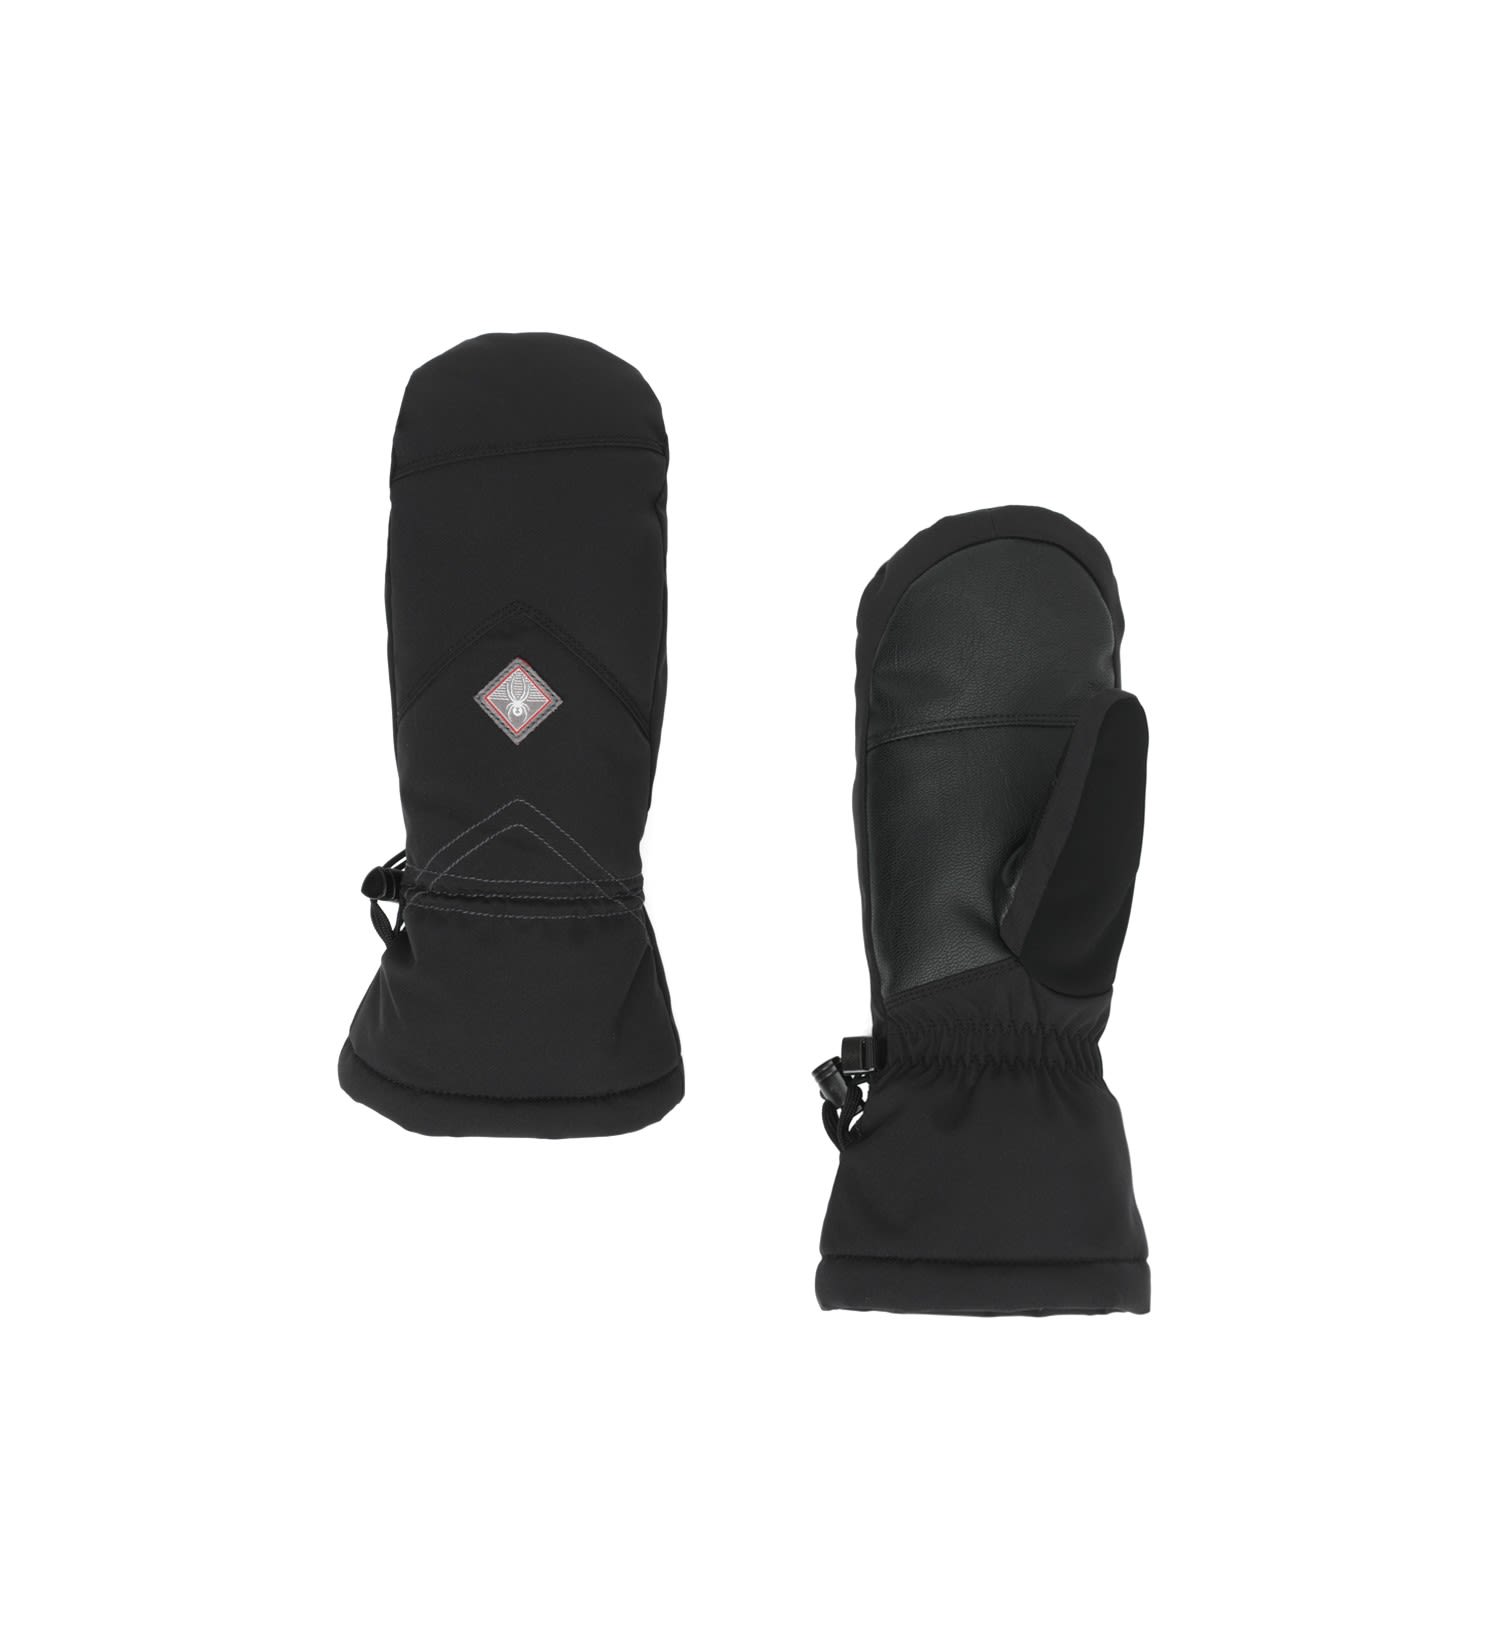 Spyder Inspire Ski Glove Schwarz- Female Daunen Fausthandschuhe- Grsse S - Farbe Black unter Spyder